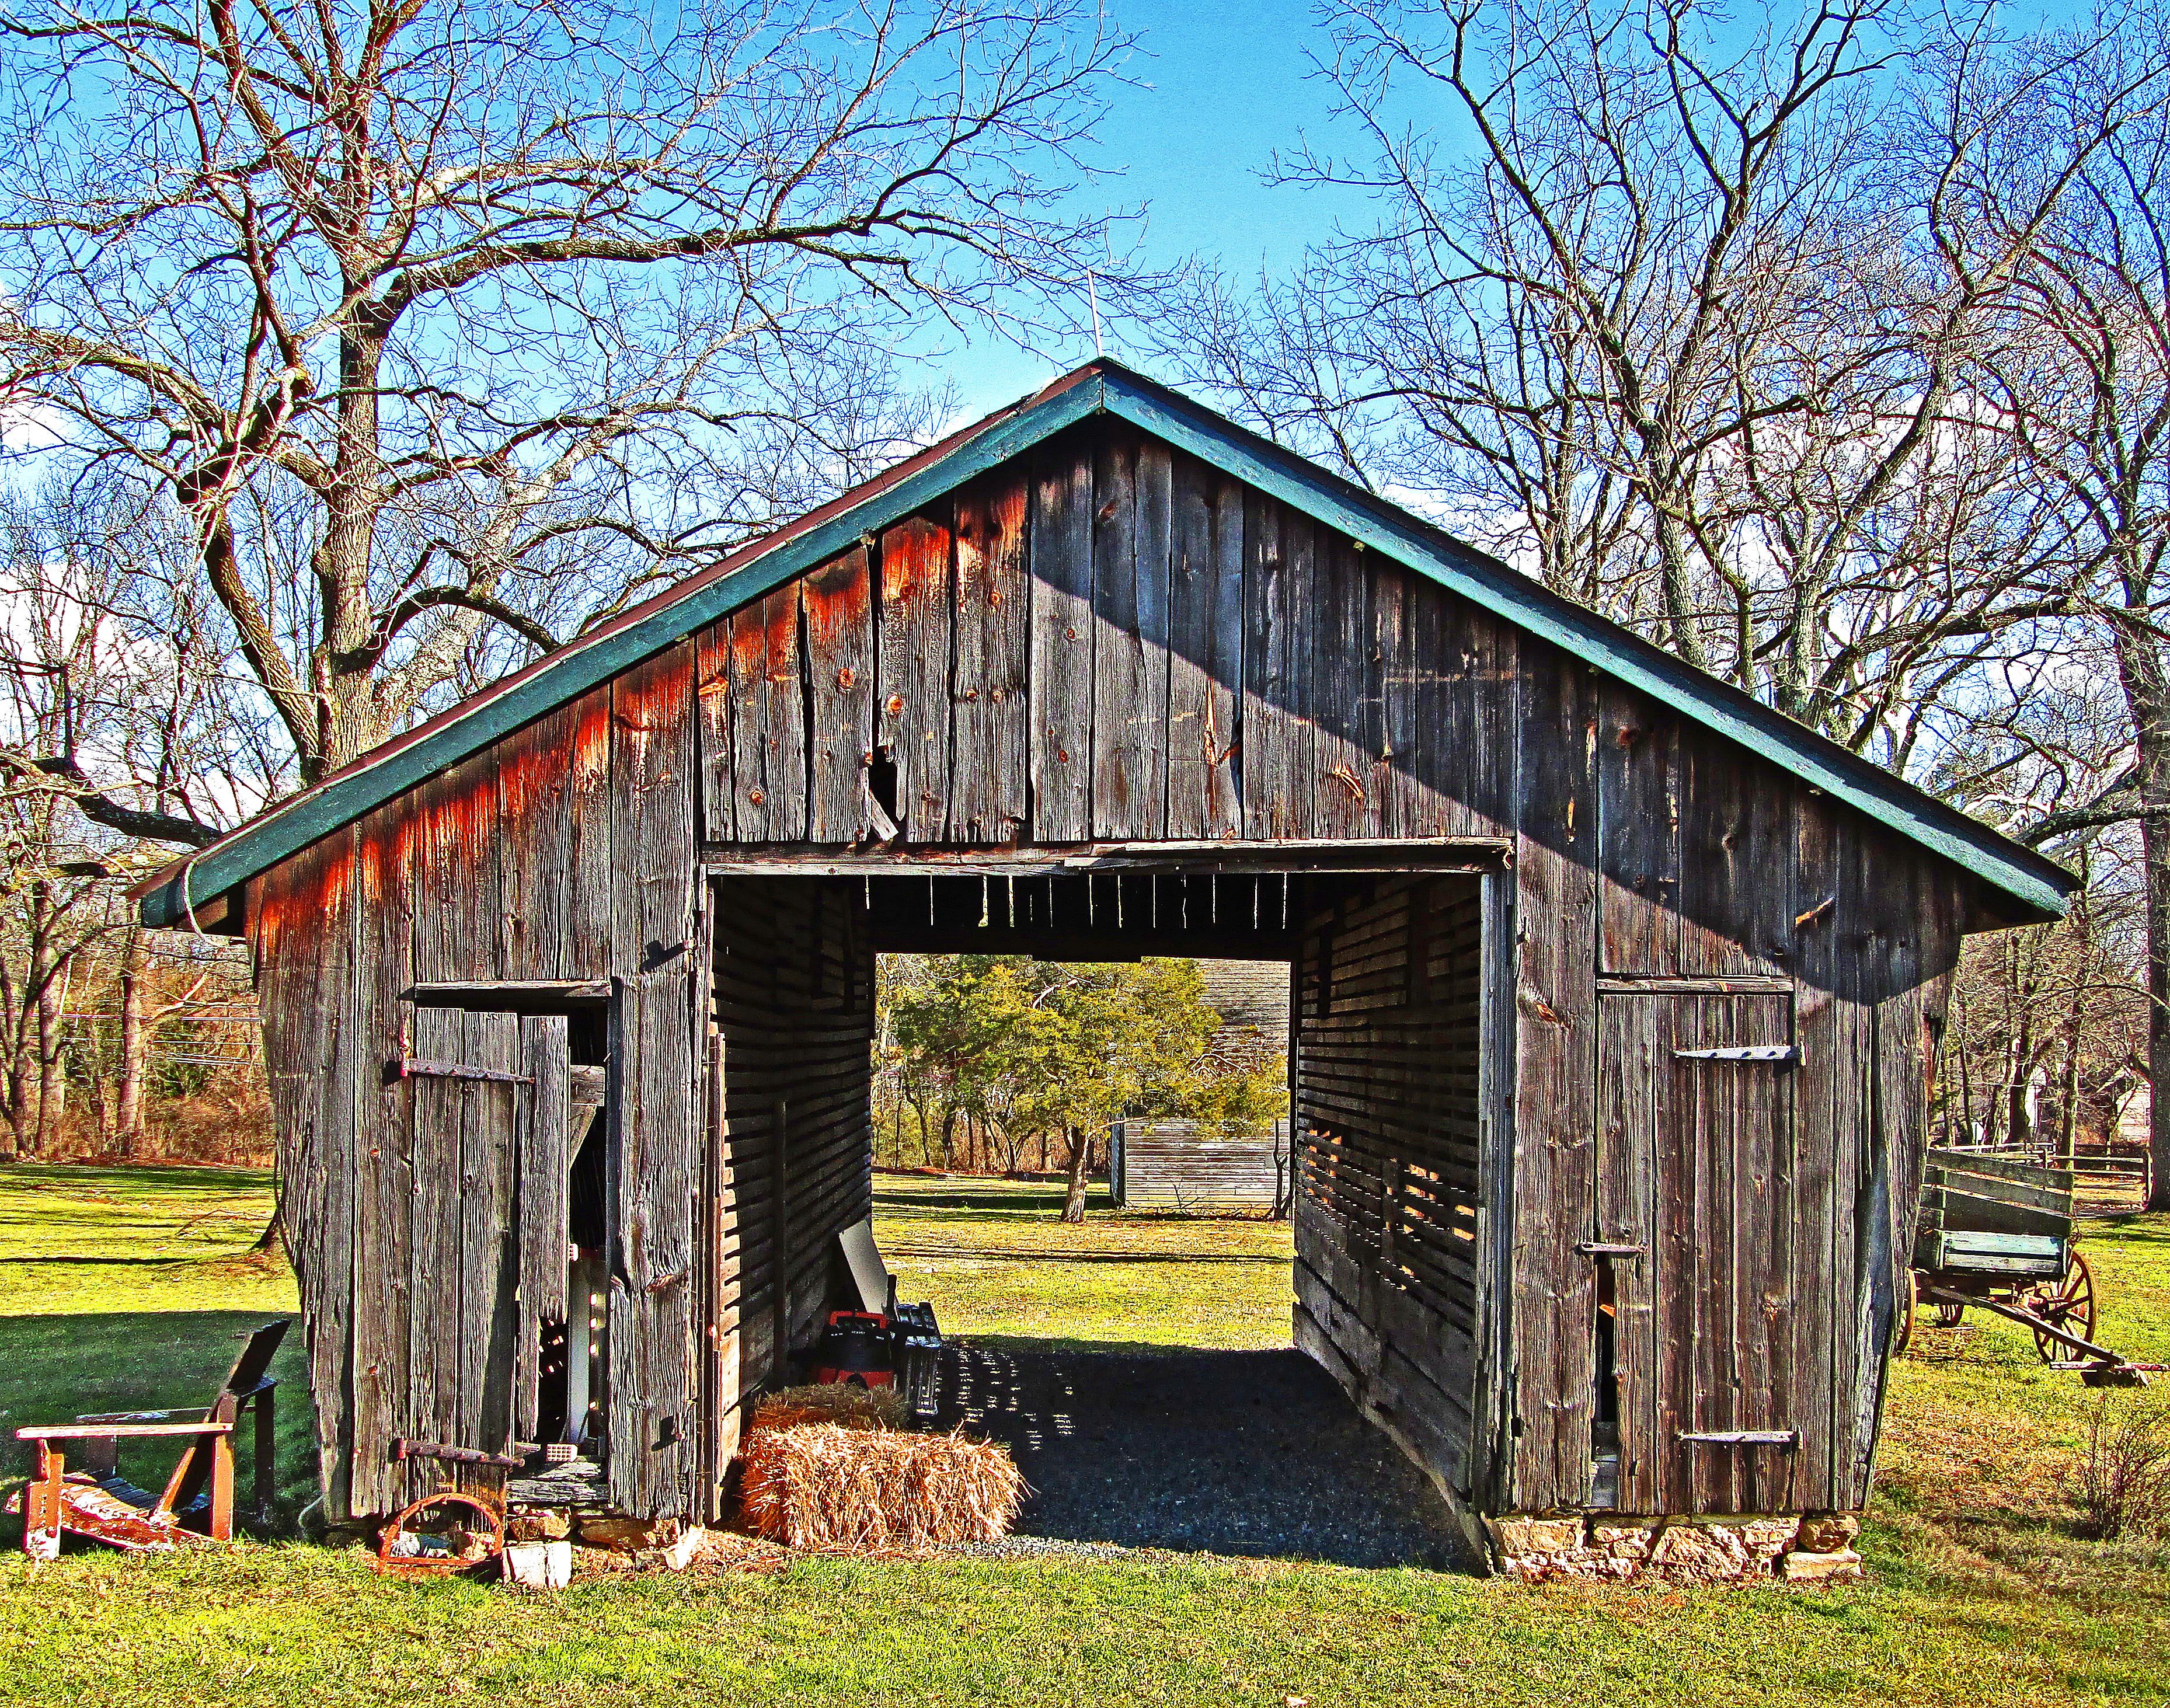 Small Weathered Barn | Barns | Pinterest | Barn and Weather